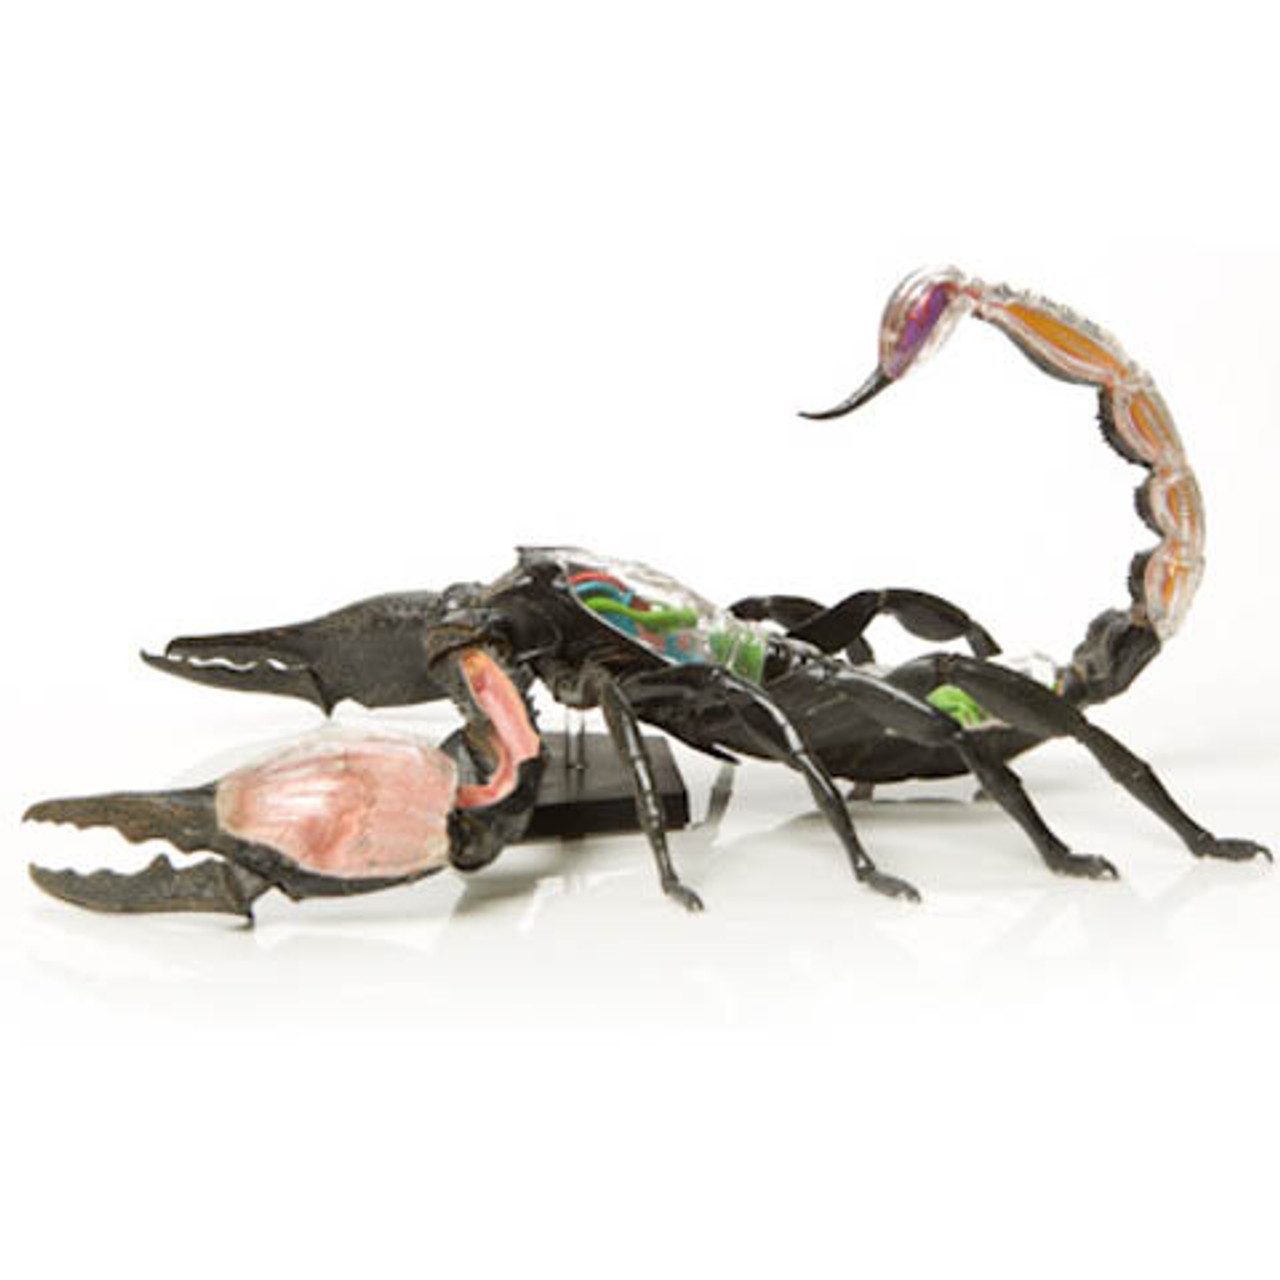 Scorpion Anatomy